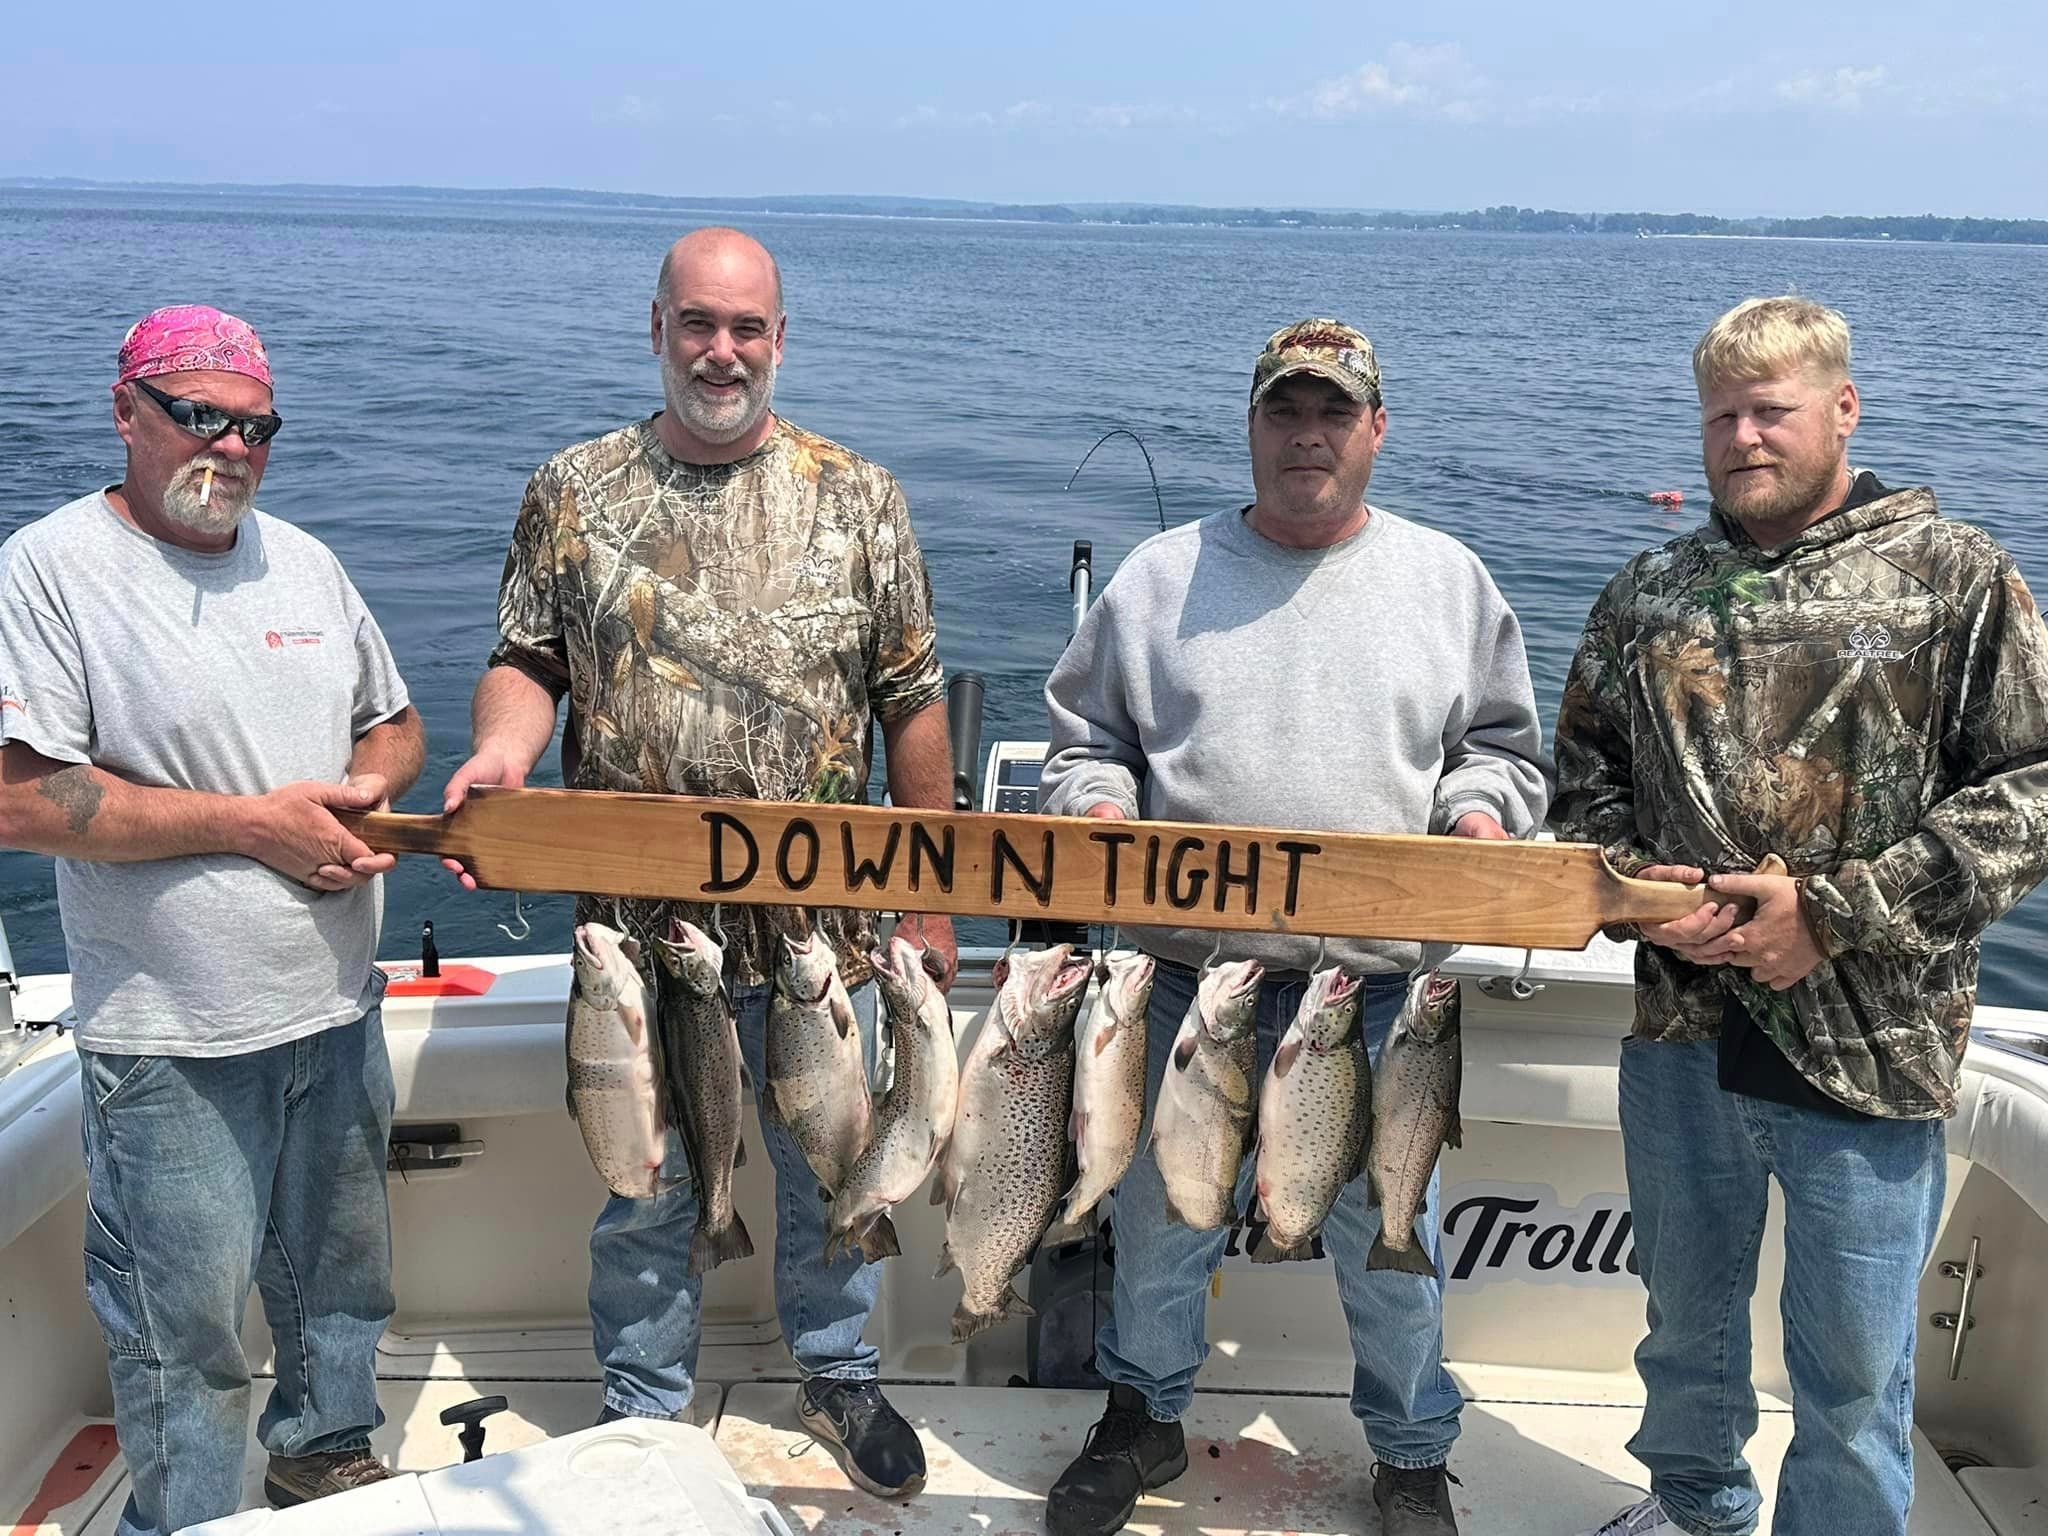 Down and Tight Sportfishing Lake Ontario Fishing Charters | Private - 6 to 8 Hour Seasonal Trip fishing Lake